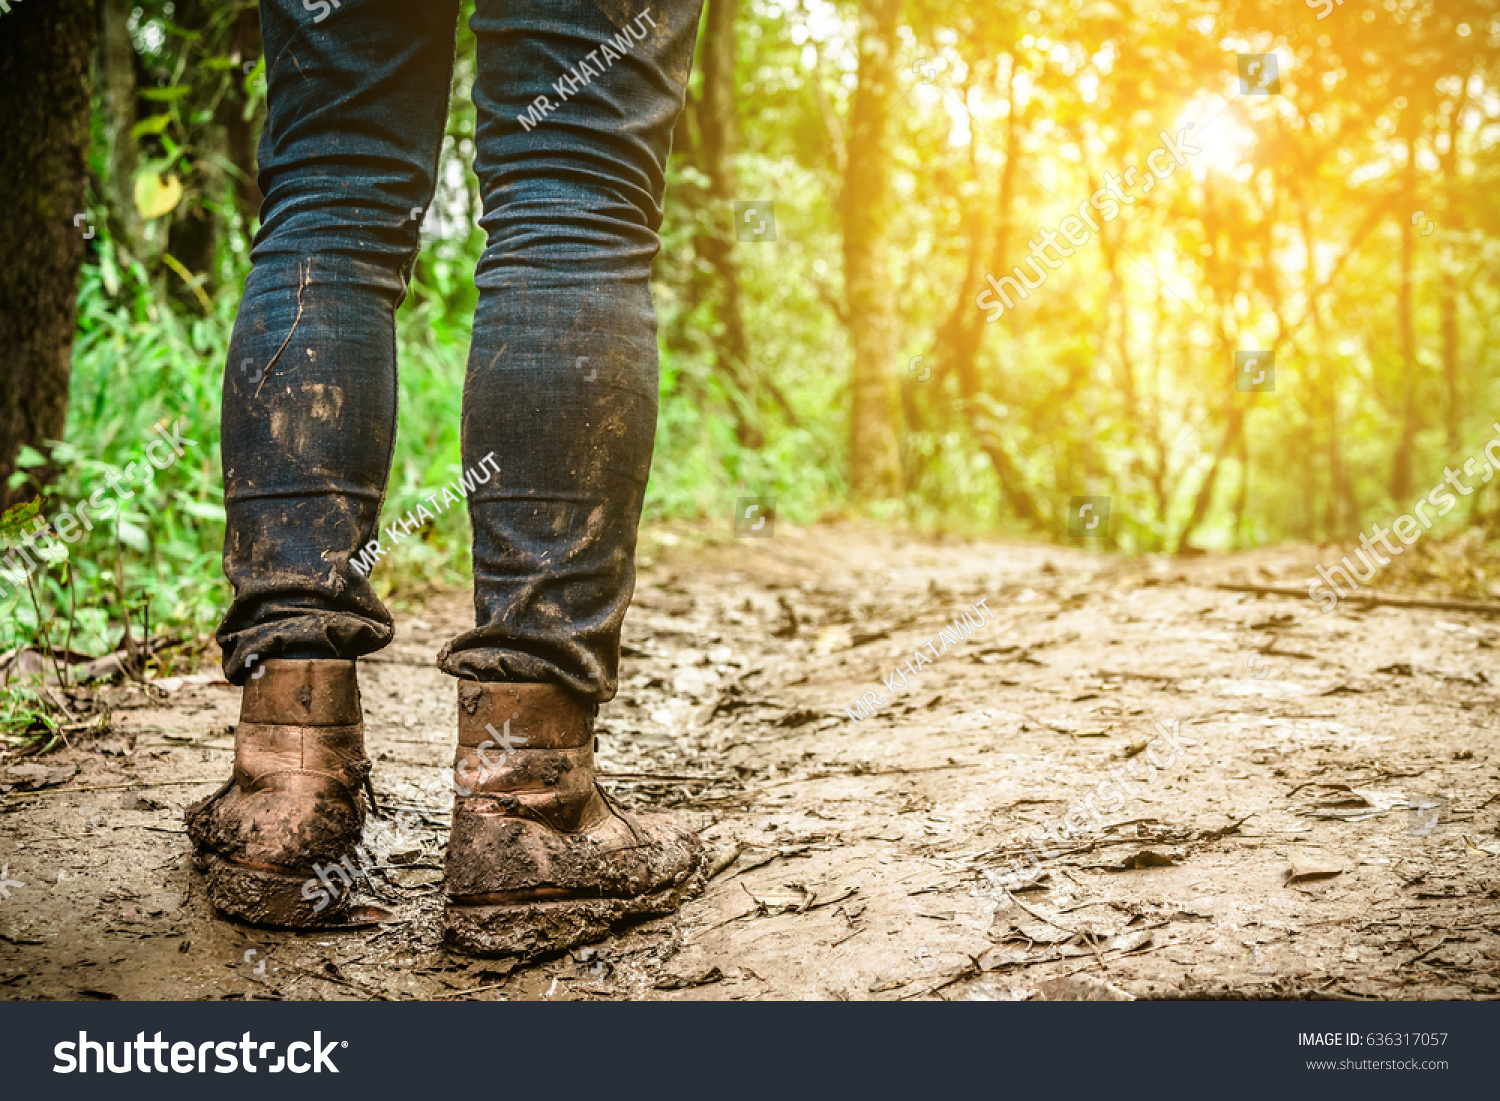 rocky mud boots